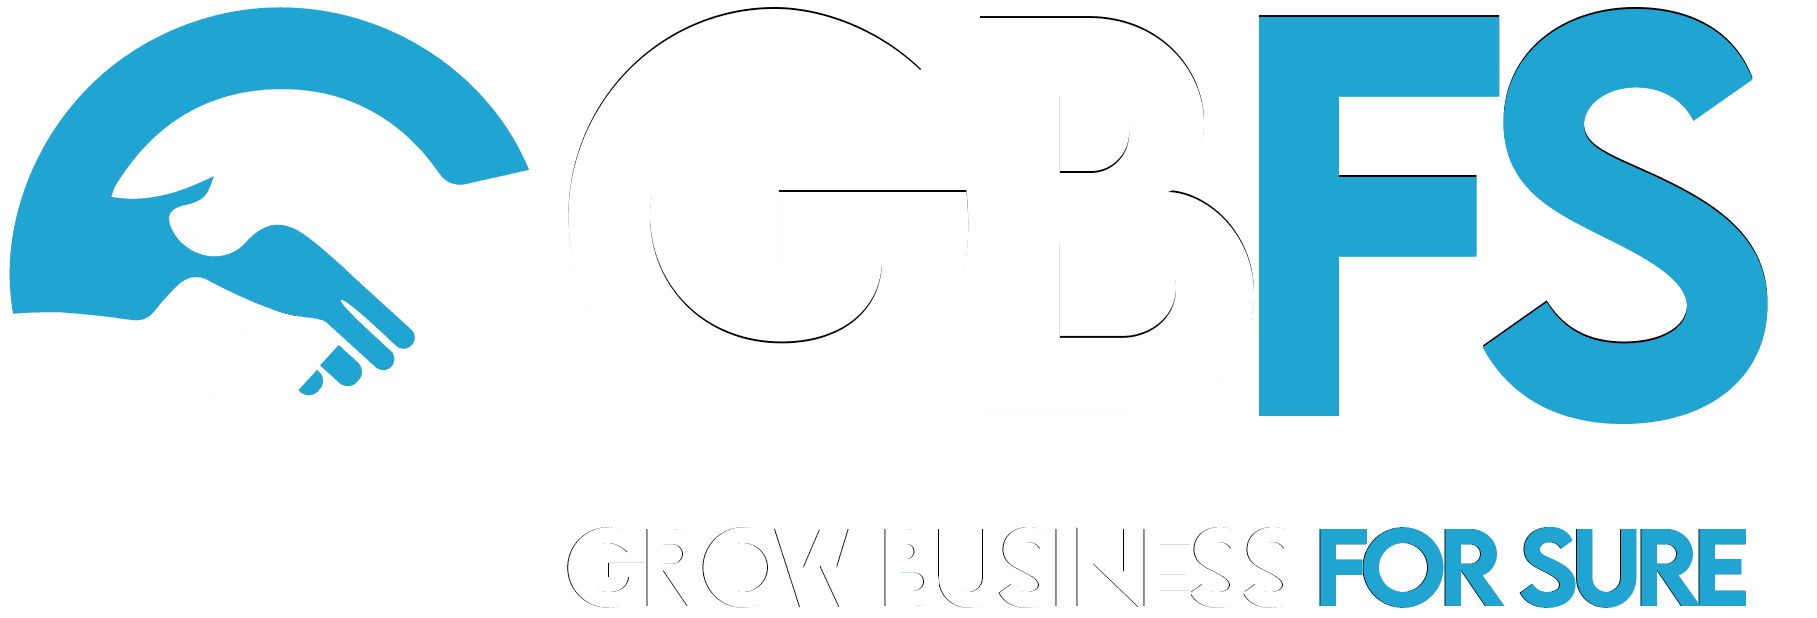 B2B Lead Generation Services | Best Quality B2B Leads